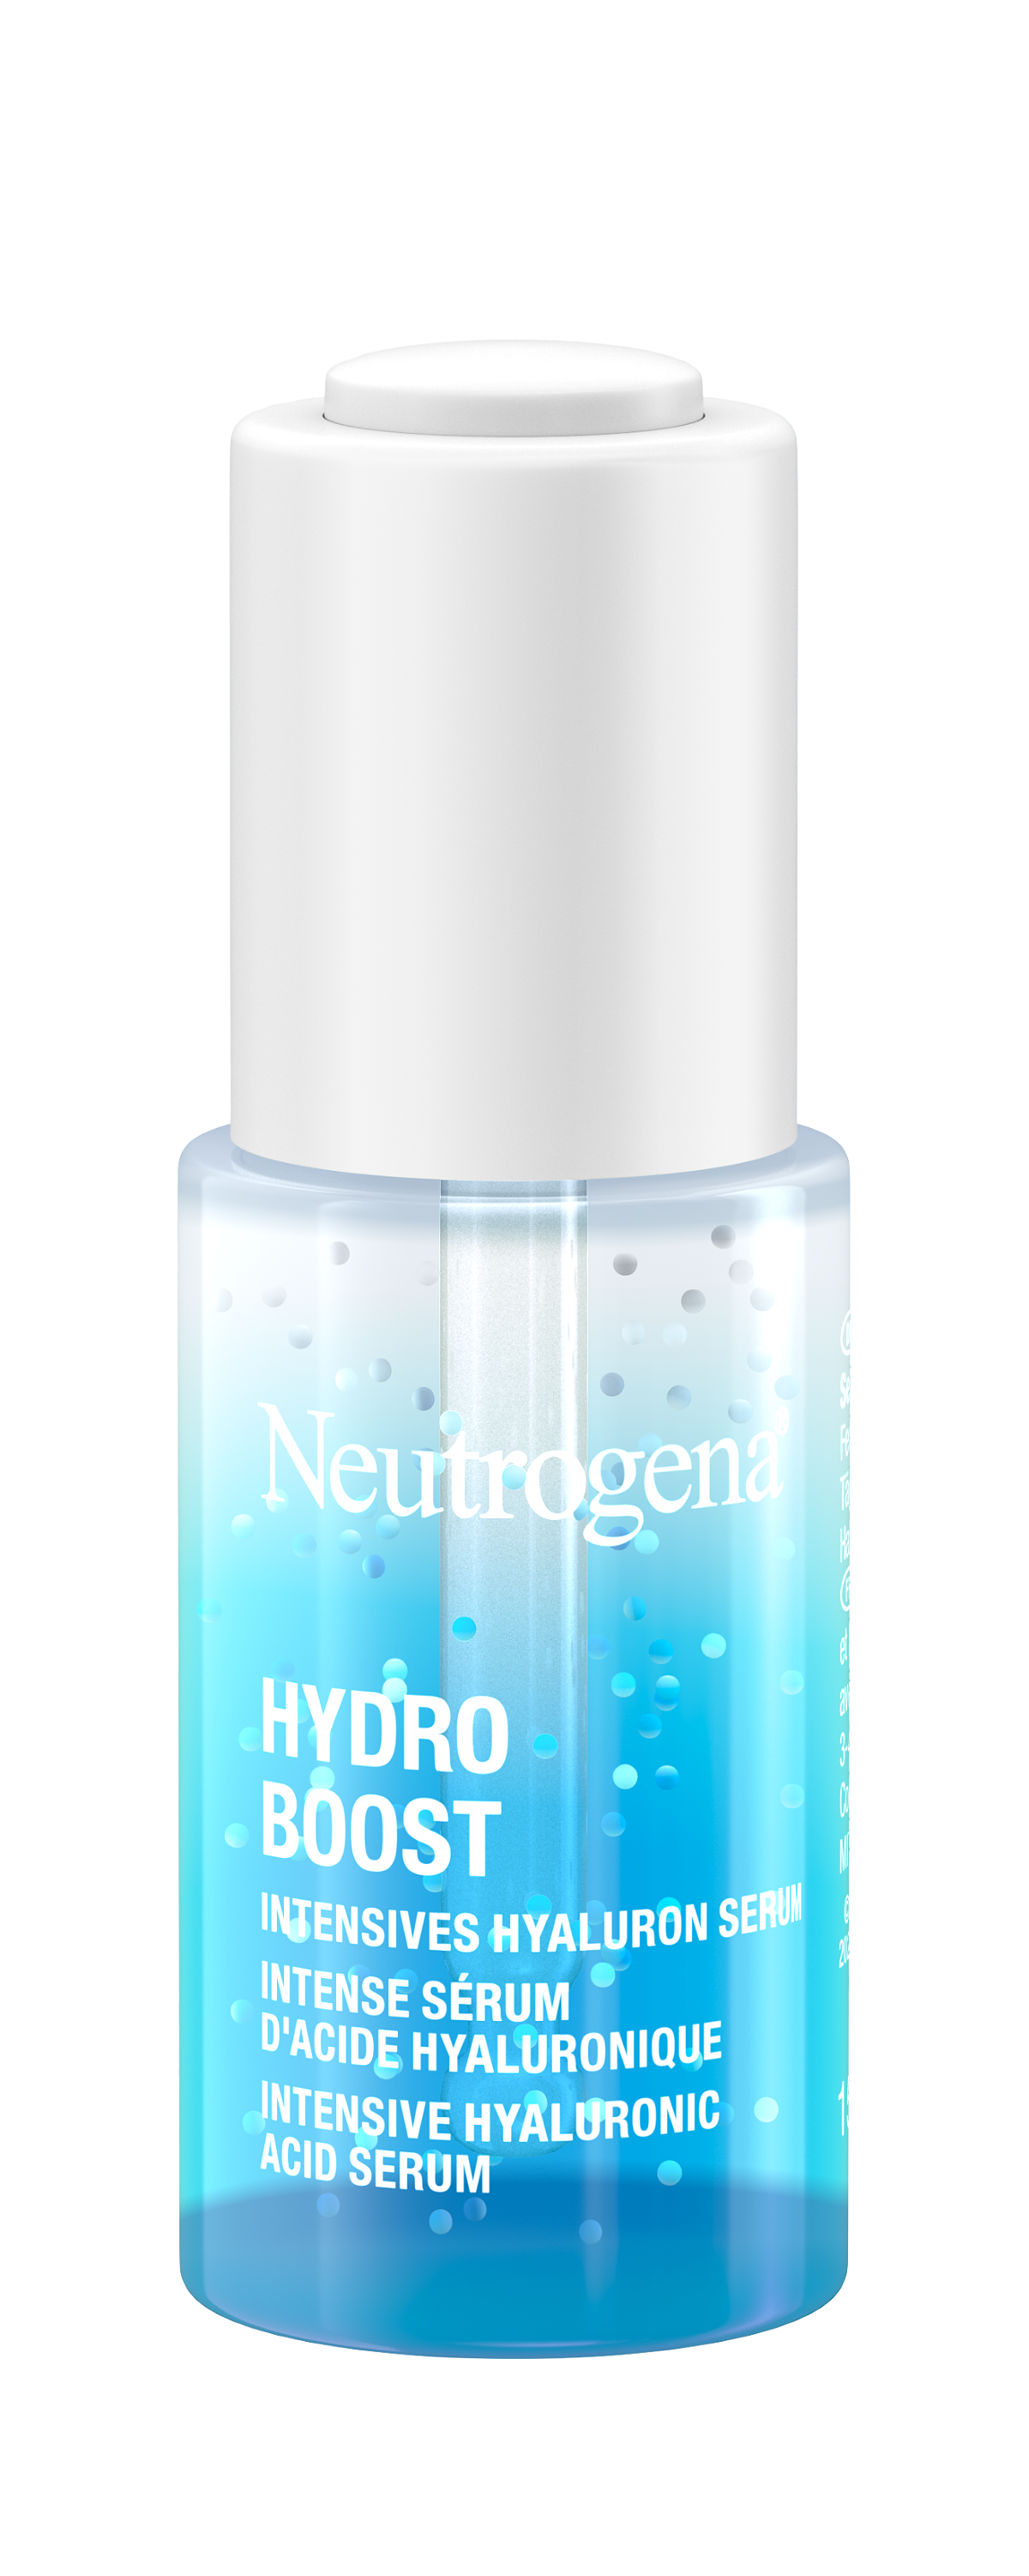 Neutrogena_Hydro_Boost_Intensives_Hyaluron_Serum_15ml